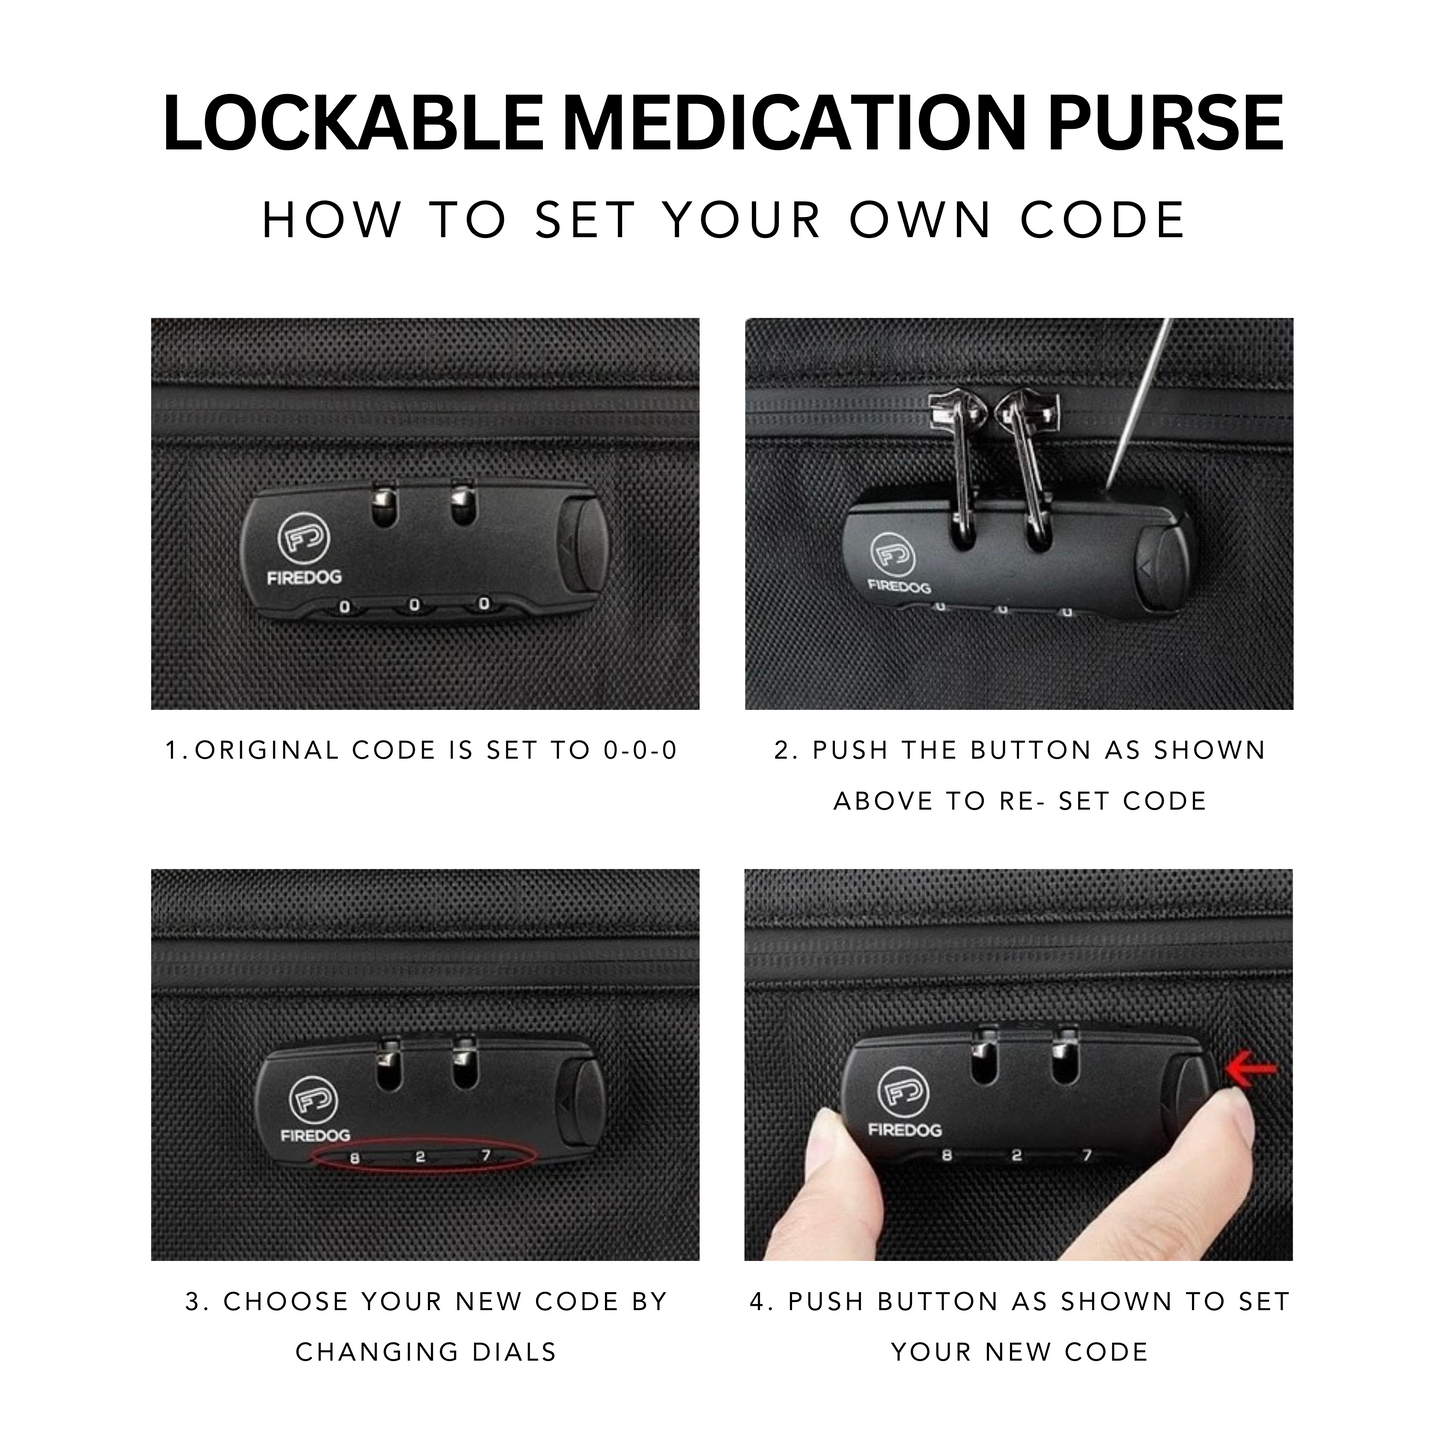 Lockable Medication Purse